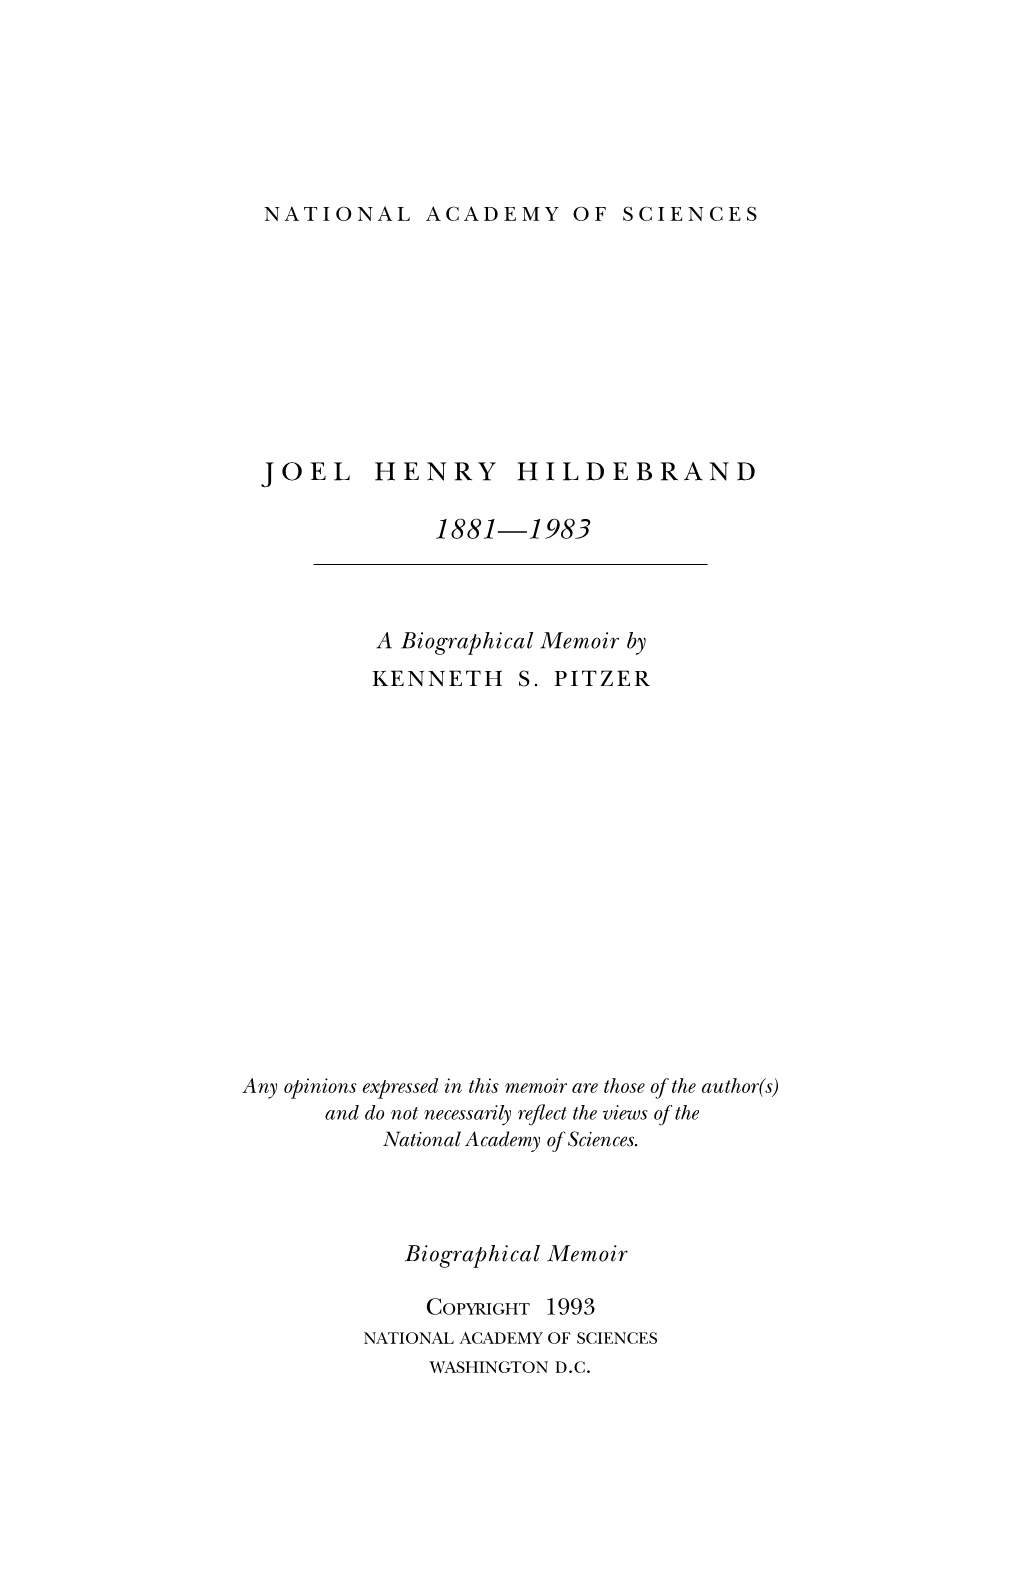 JOEL HENRY HILDEBRAND November 16, 1881-April 30, 1983